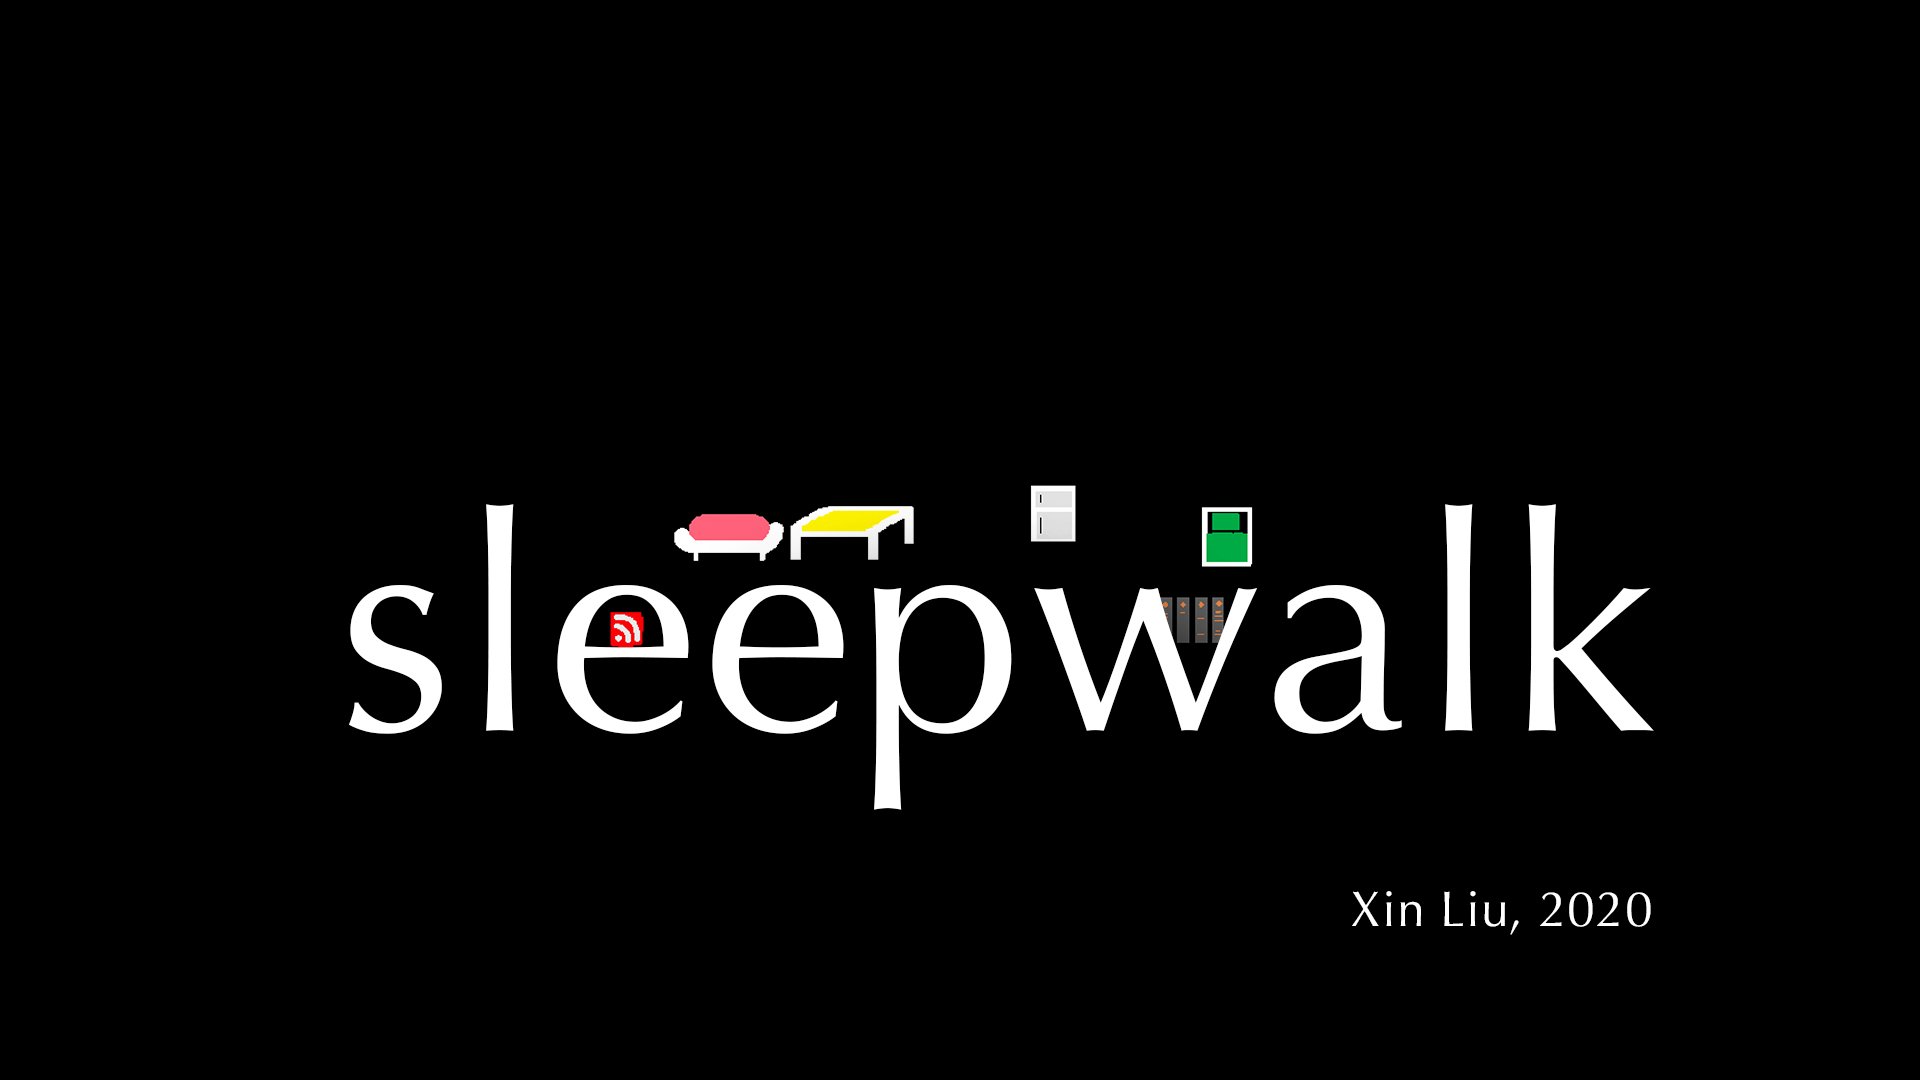 xin_liu_sleepwalk_1.jpg